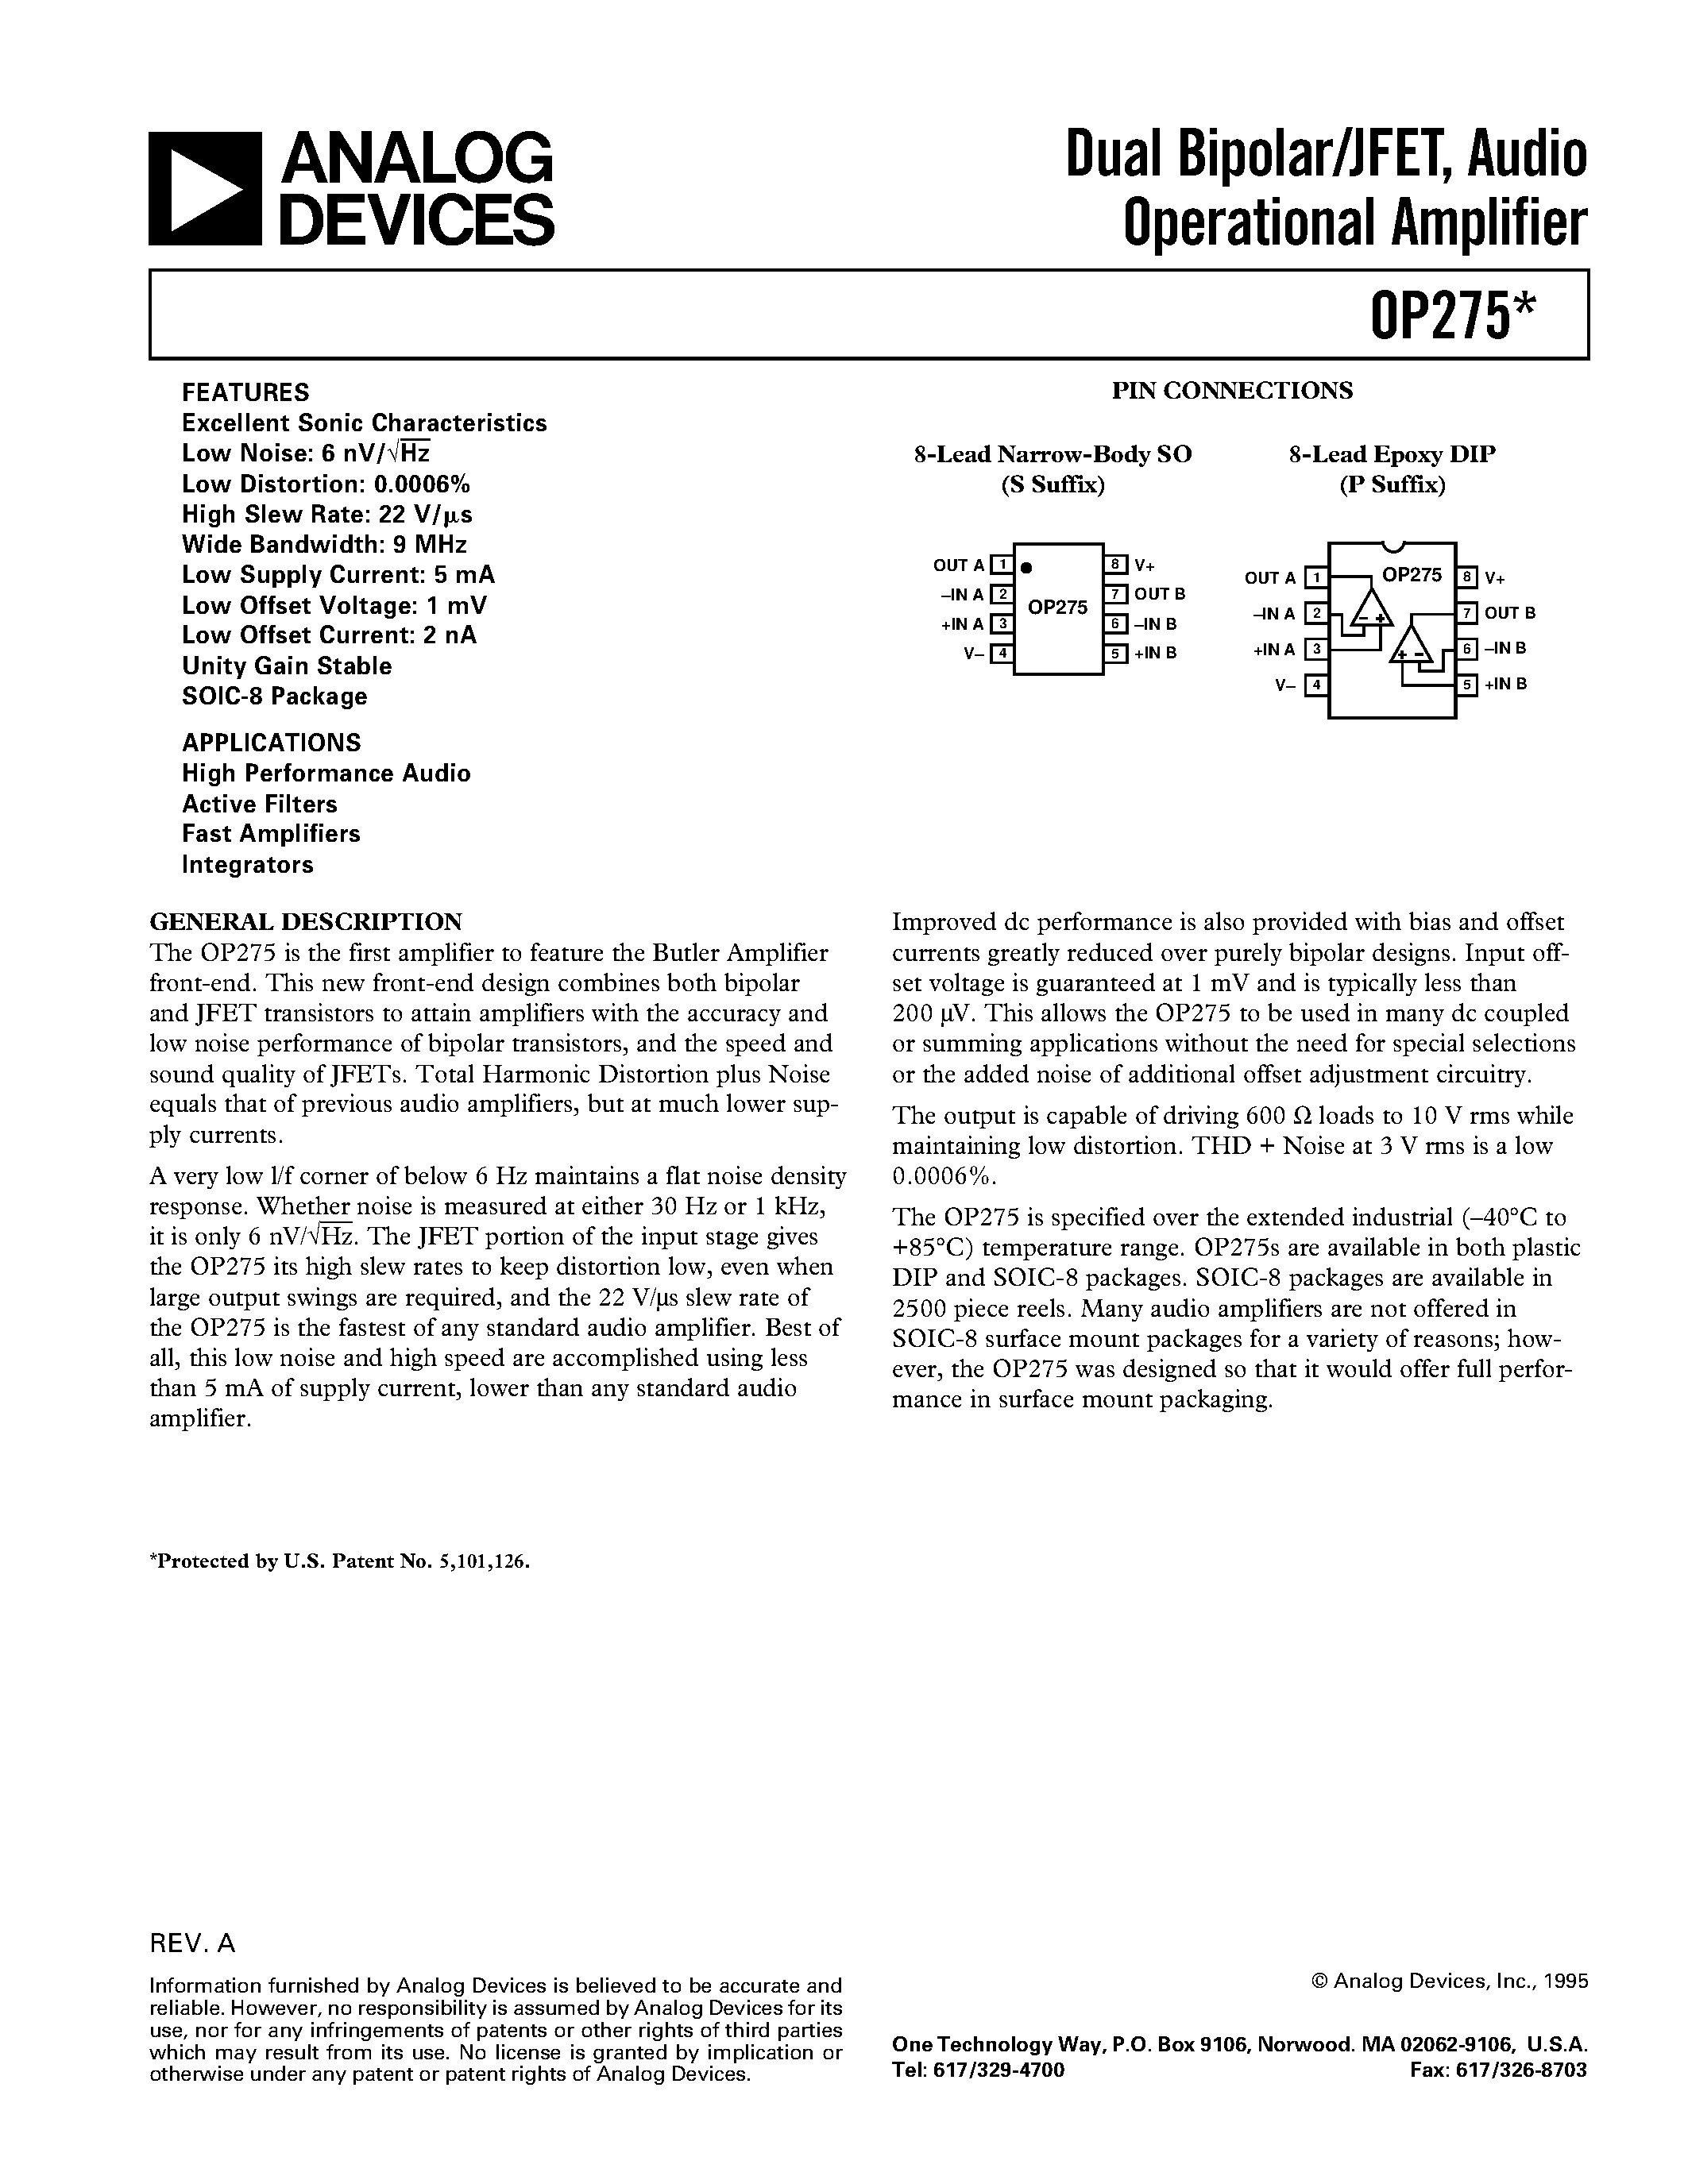 Даташит OP275-Dual Bipolar/JFET / Audio Operational Amplifier страница 1